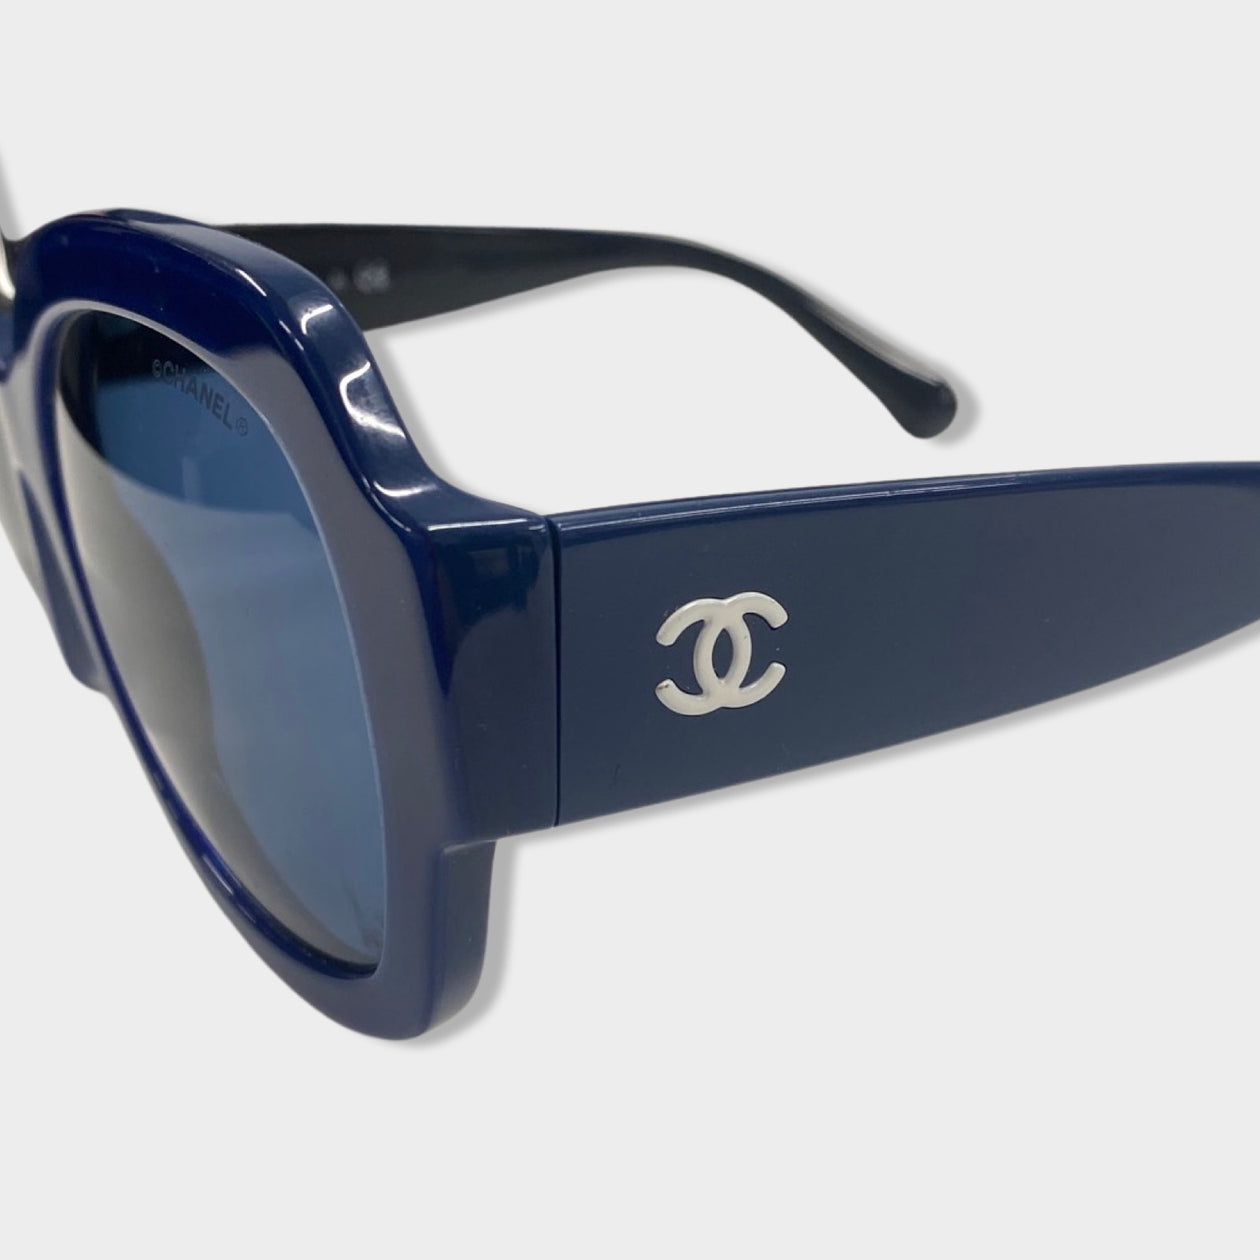 Chanel - Vintage sunglasses  Chanel sunglasses, Vintage chanel, Sunglasses  vintage